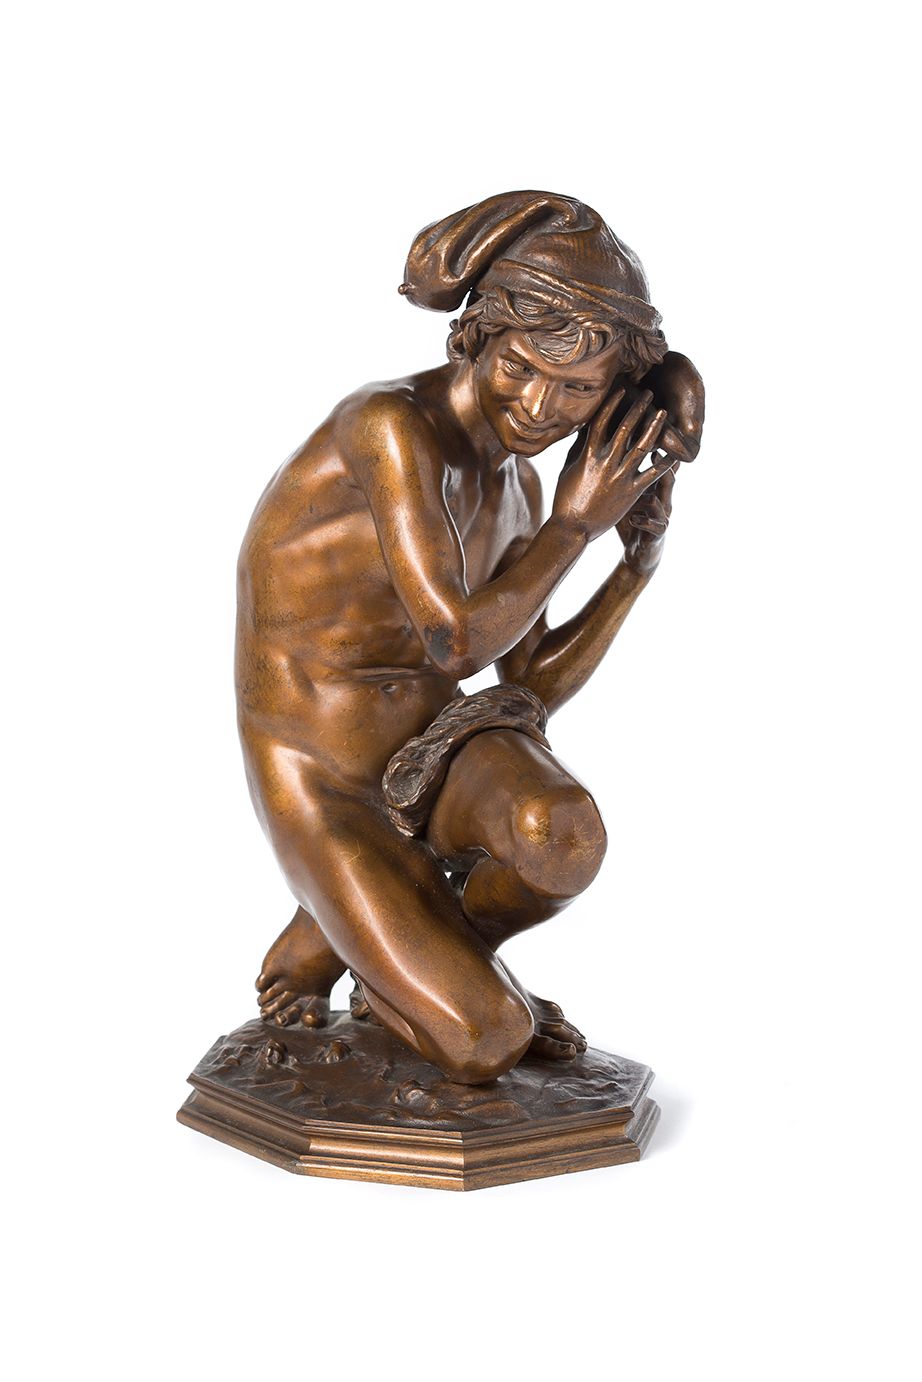 Jean-Baptiste CARPEAUX (1827-1875) 
那不勒斯渔夫拿着一个贝壳。
青铜，有阴影的棕色铜锈。
躺在一个多边形的平台上。
有签名，&hellip;